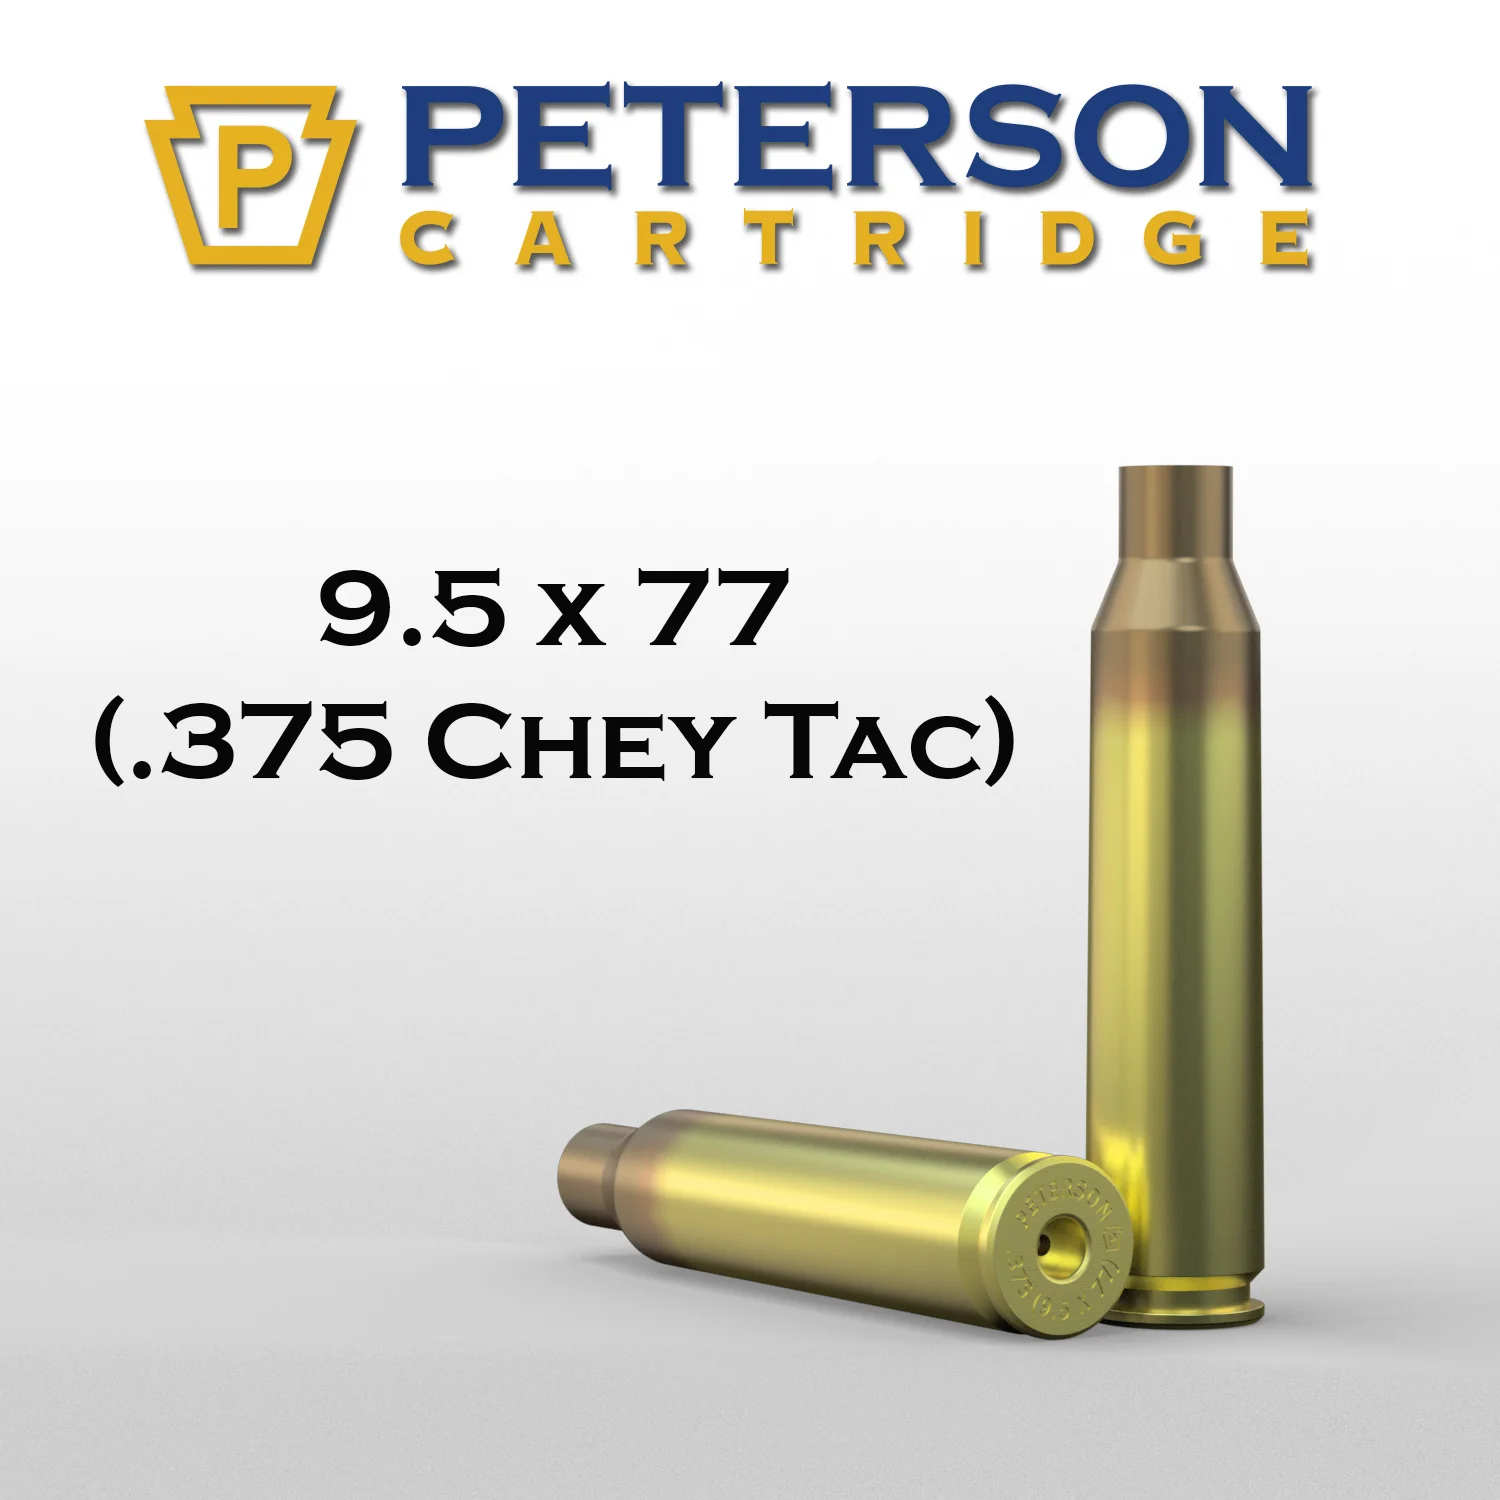 Peterson Cartridge 375 CheyTac (9.5x77) Unprimed Brass 50ct